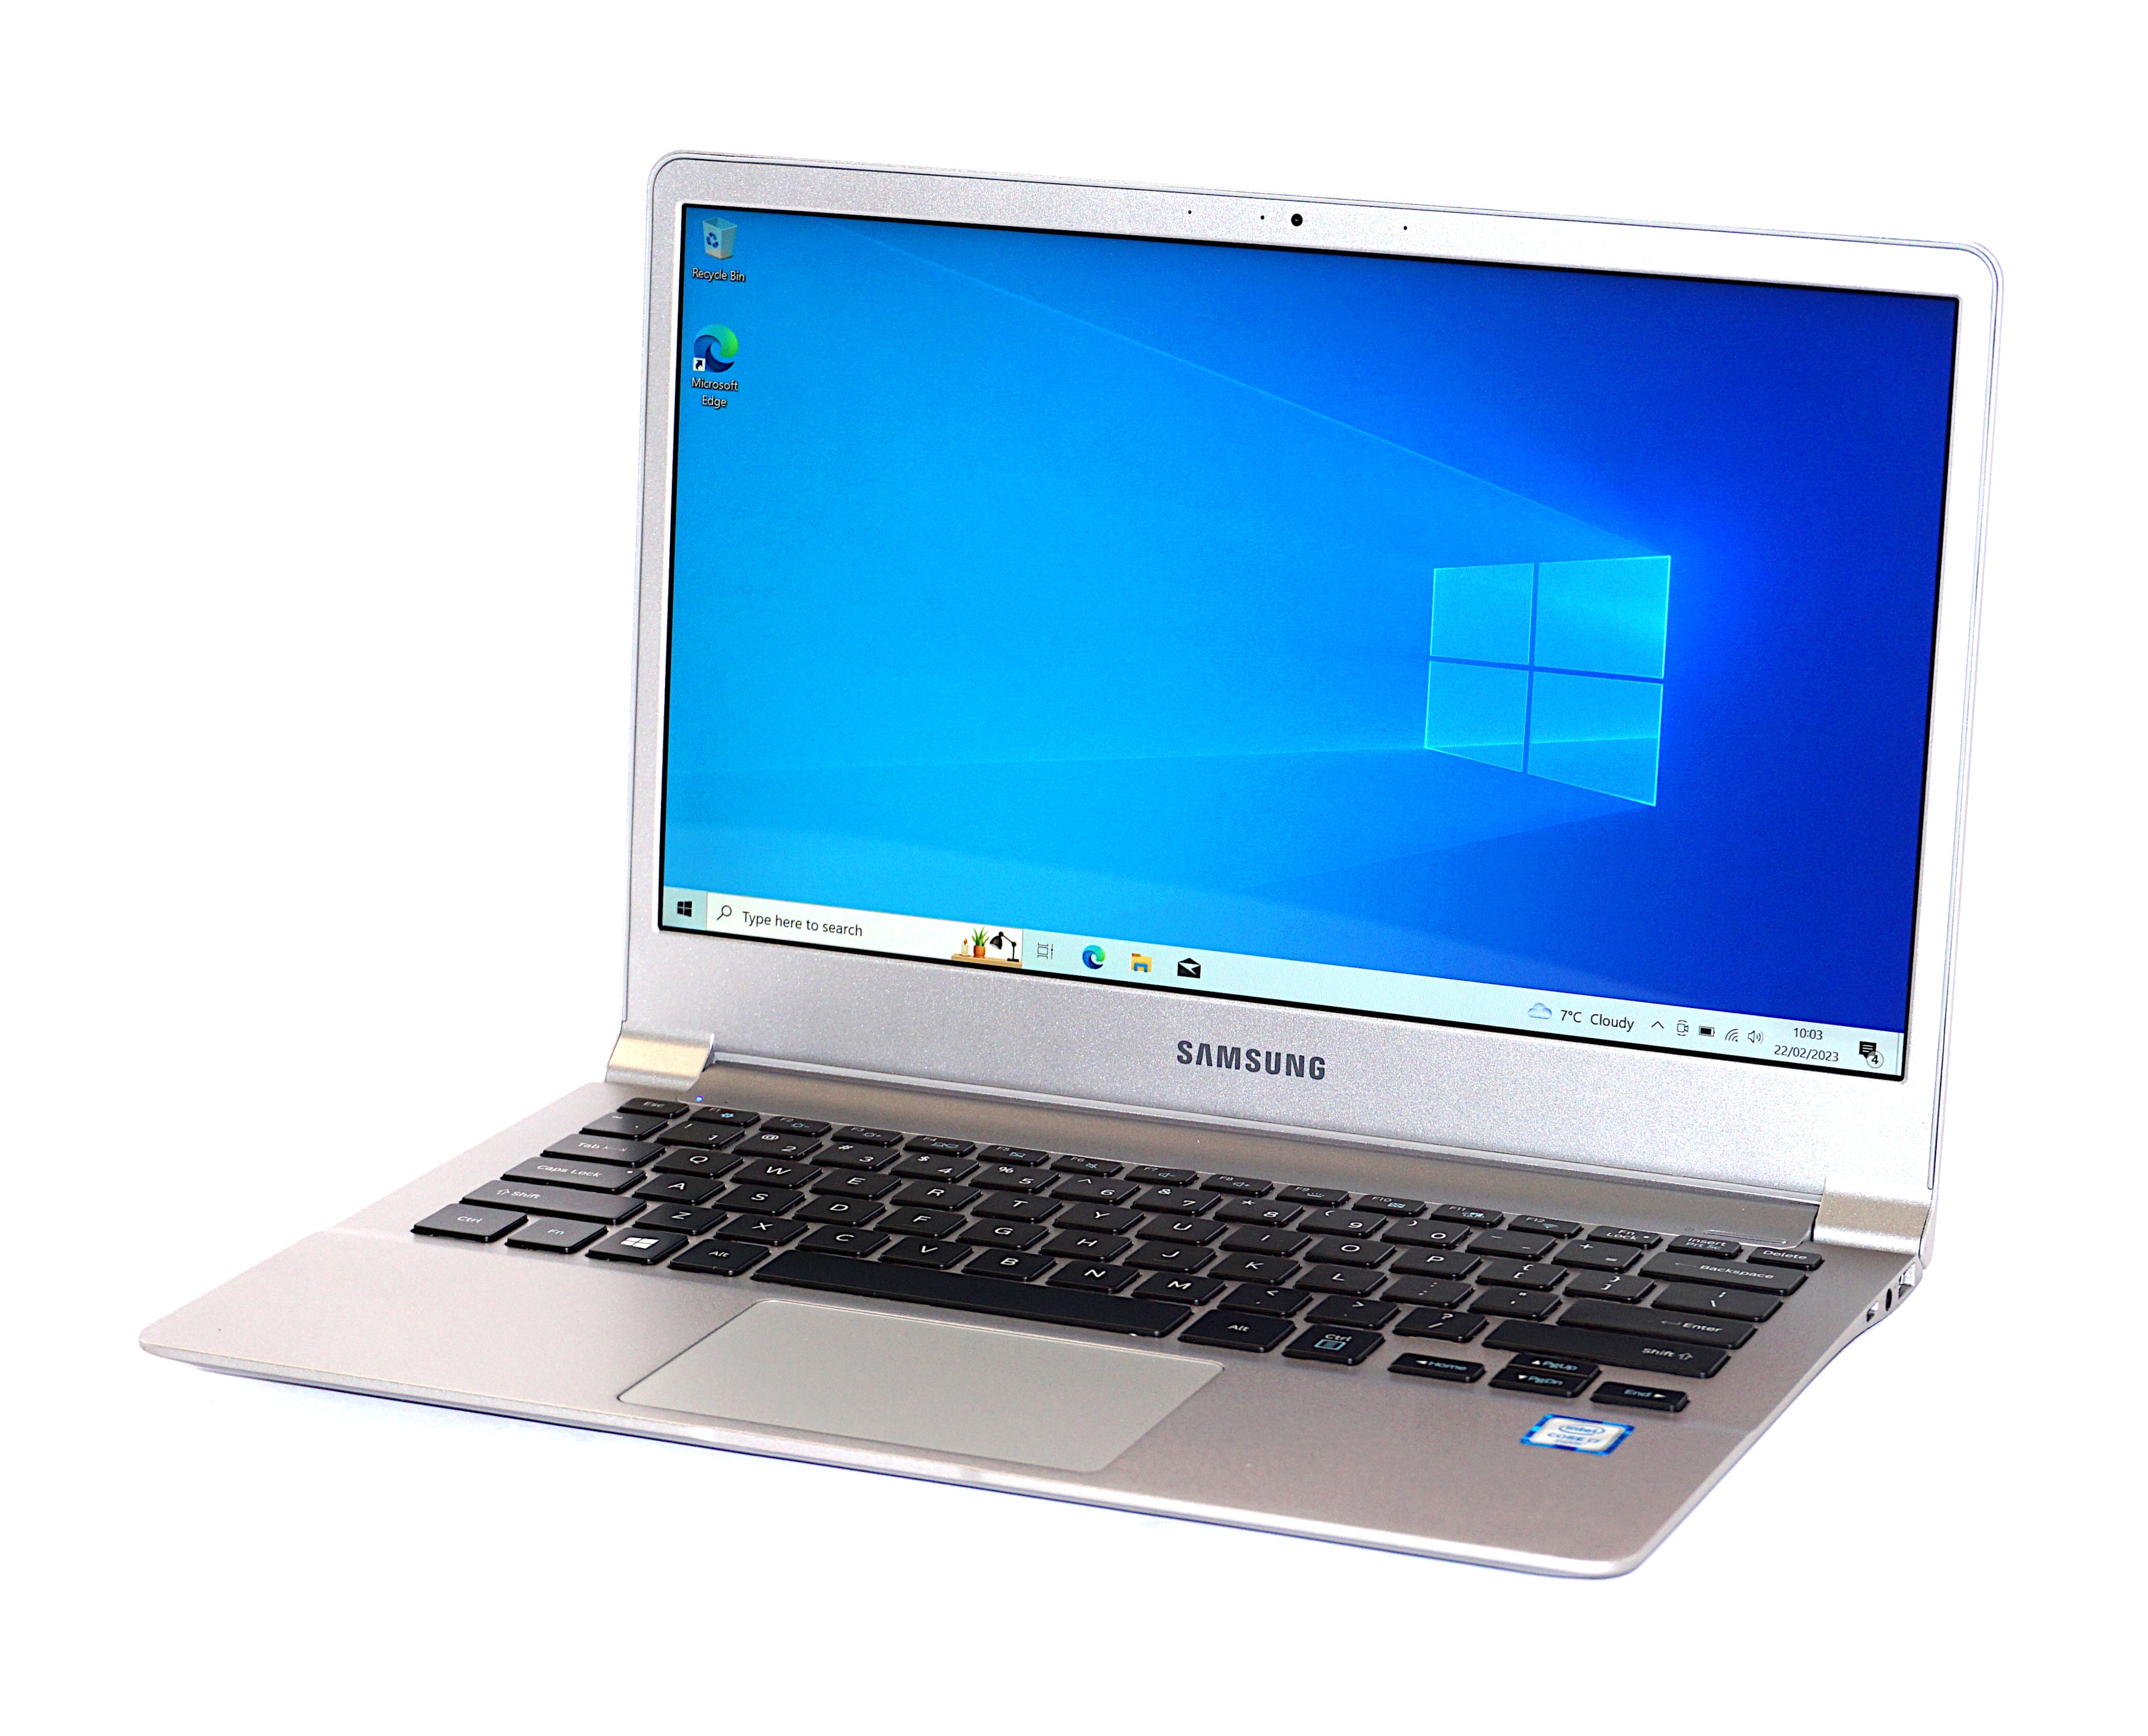 Samsung NP900X3H Laptop, 13.3" Core i7 6th Gen, 8GB RAM, 256GB SSD